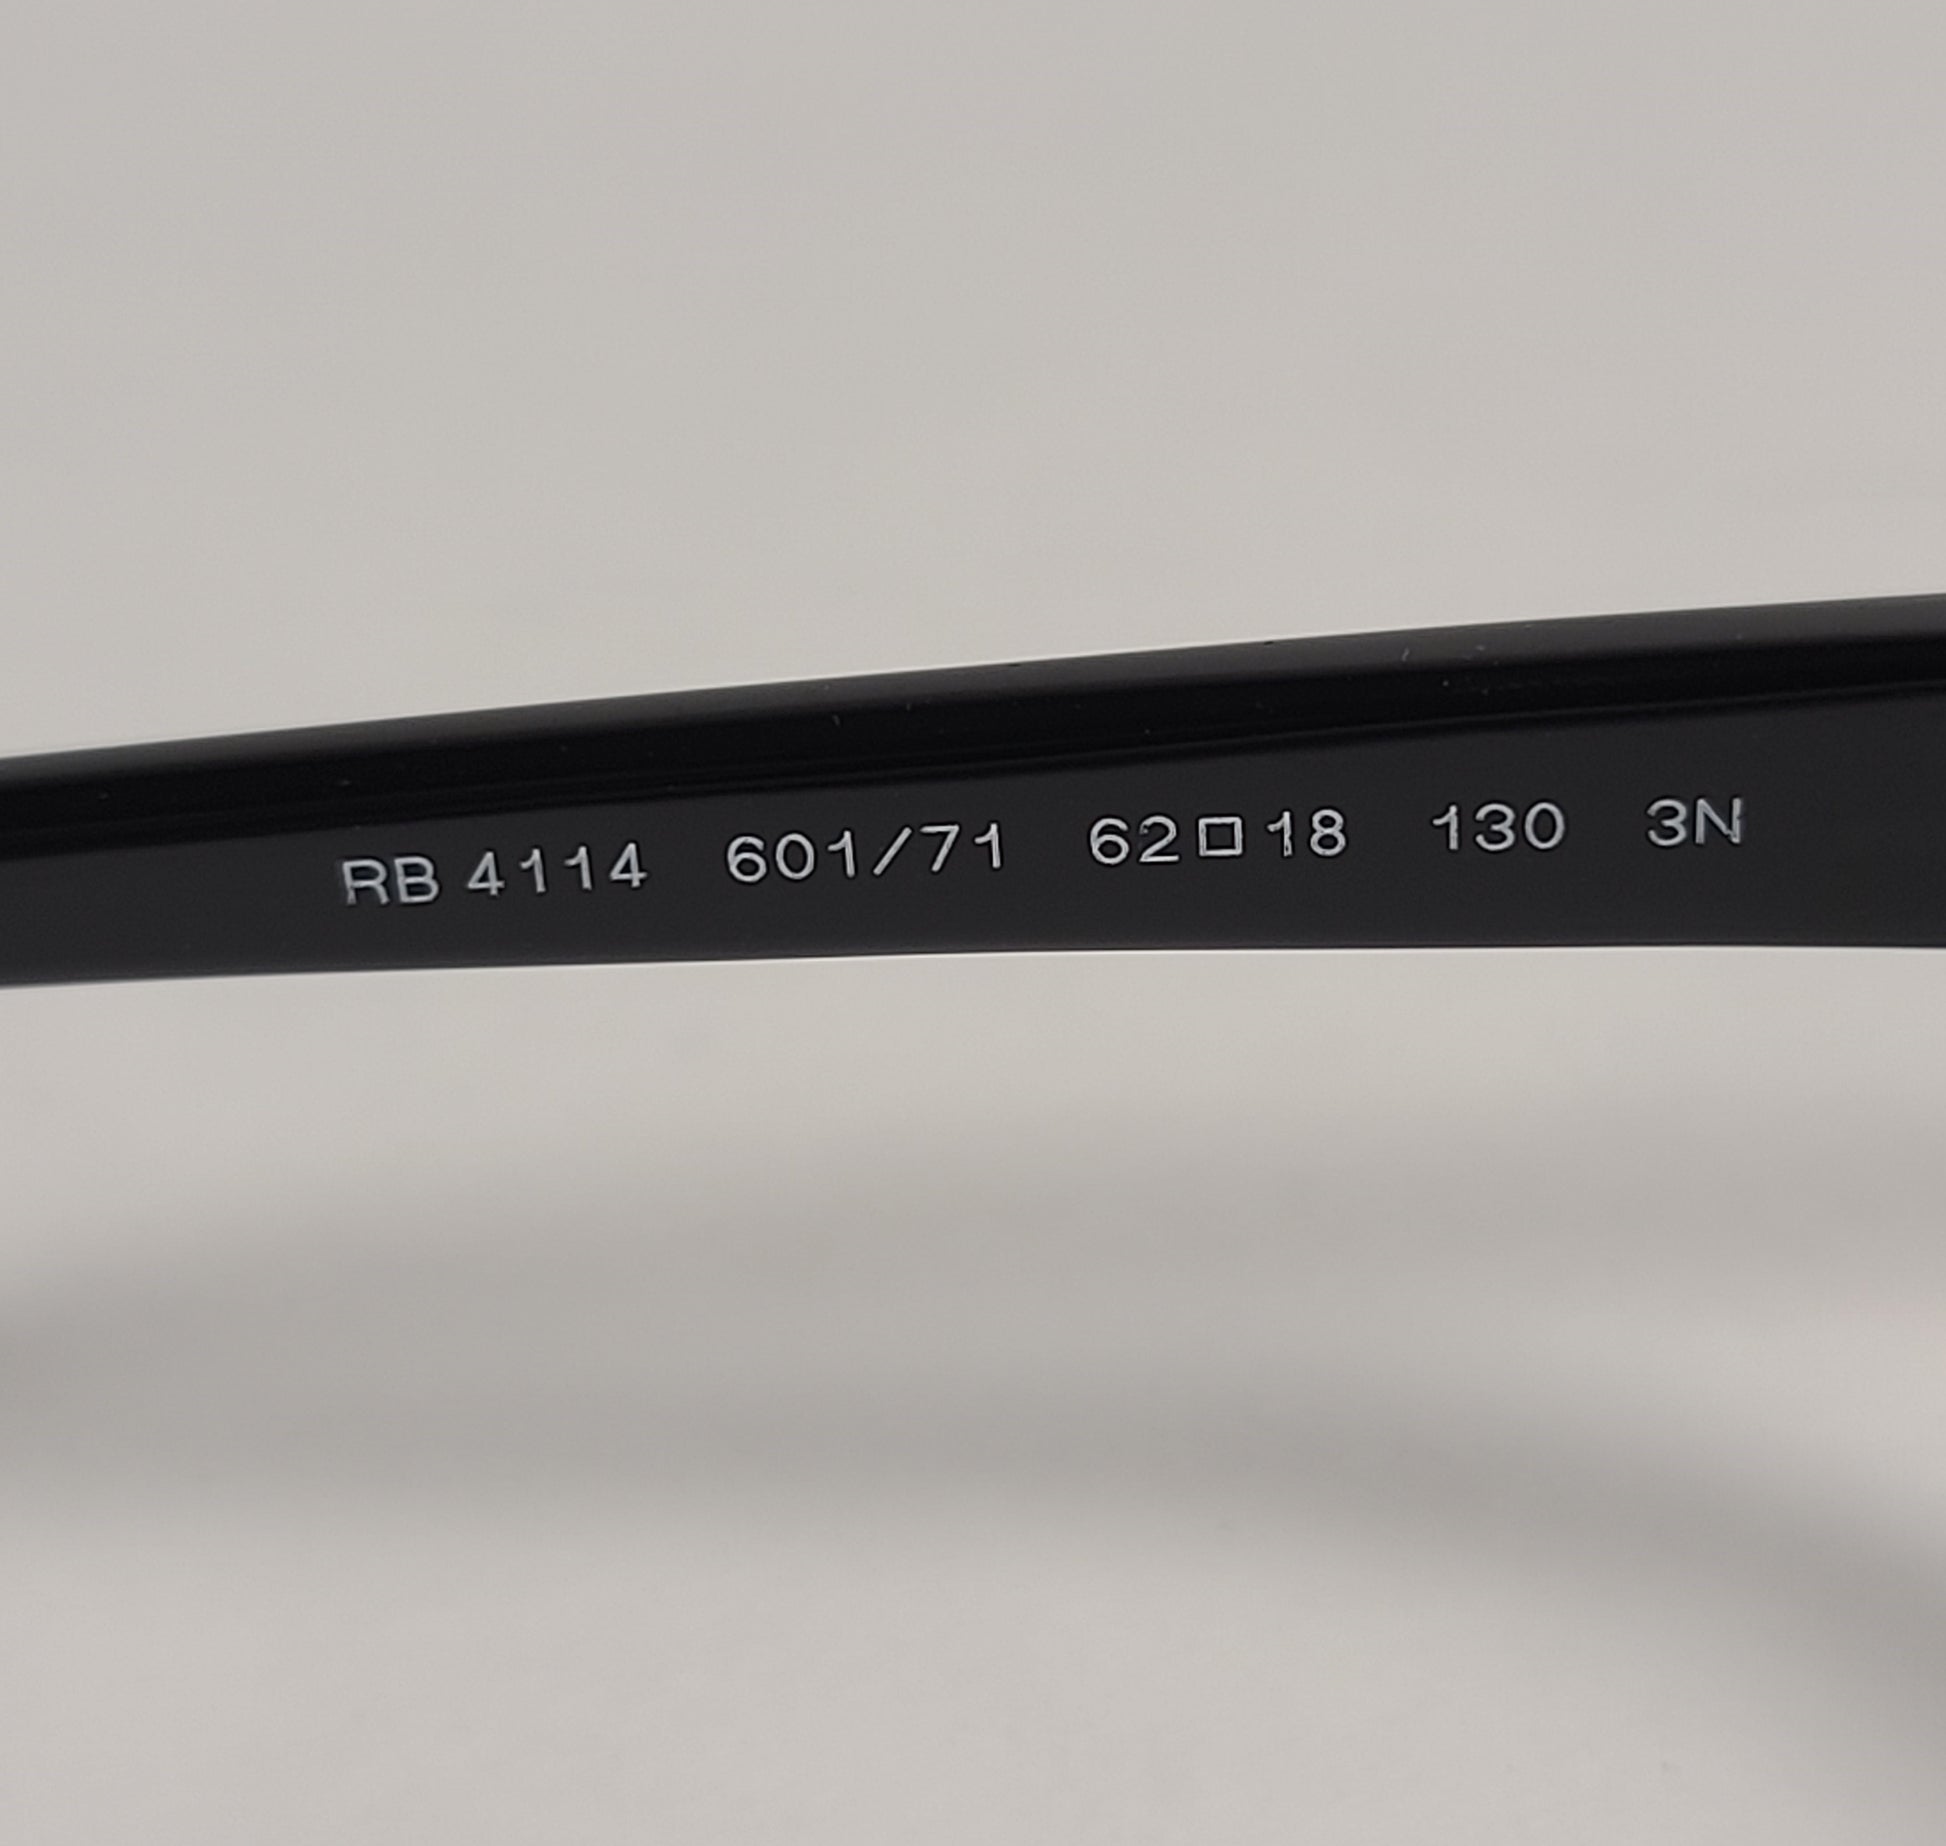 Ray-Ban Predator Active Lifestyle Wrap Sunglasses Matte Black Frame Green Lens RB4114 601/71 - Sunglasses